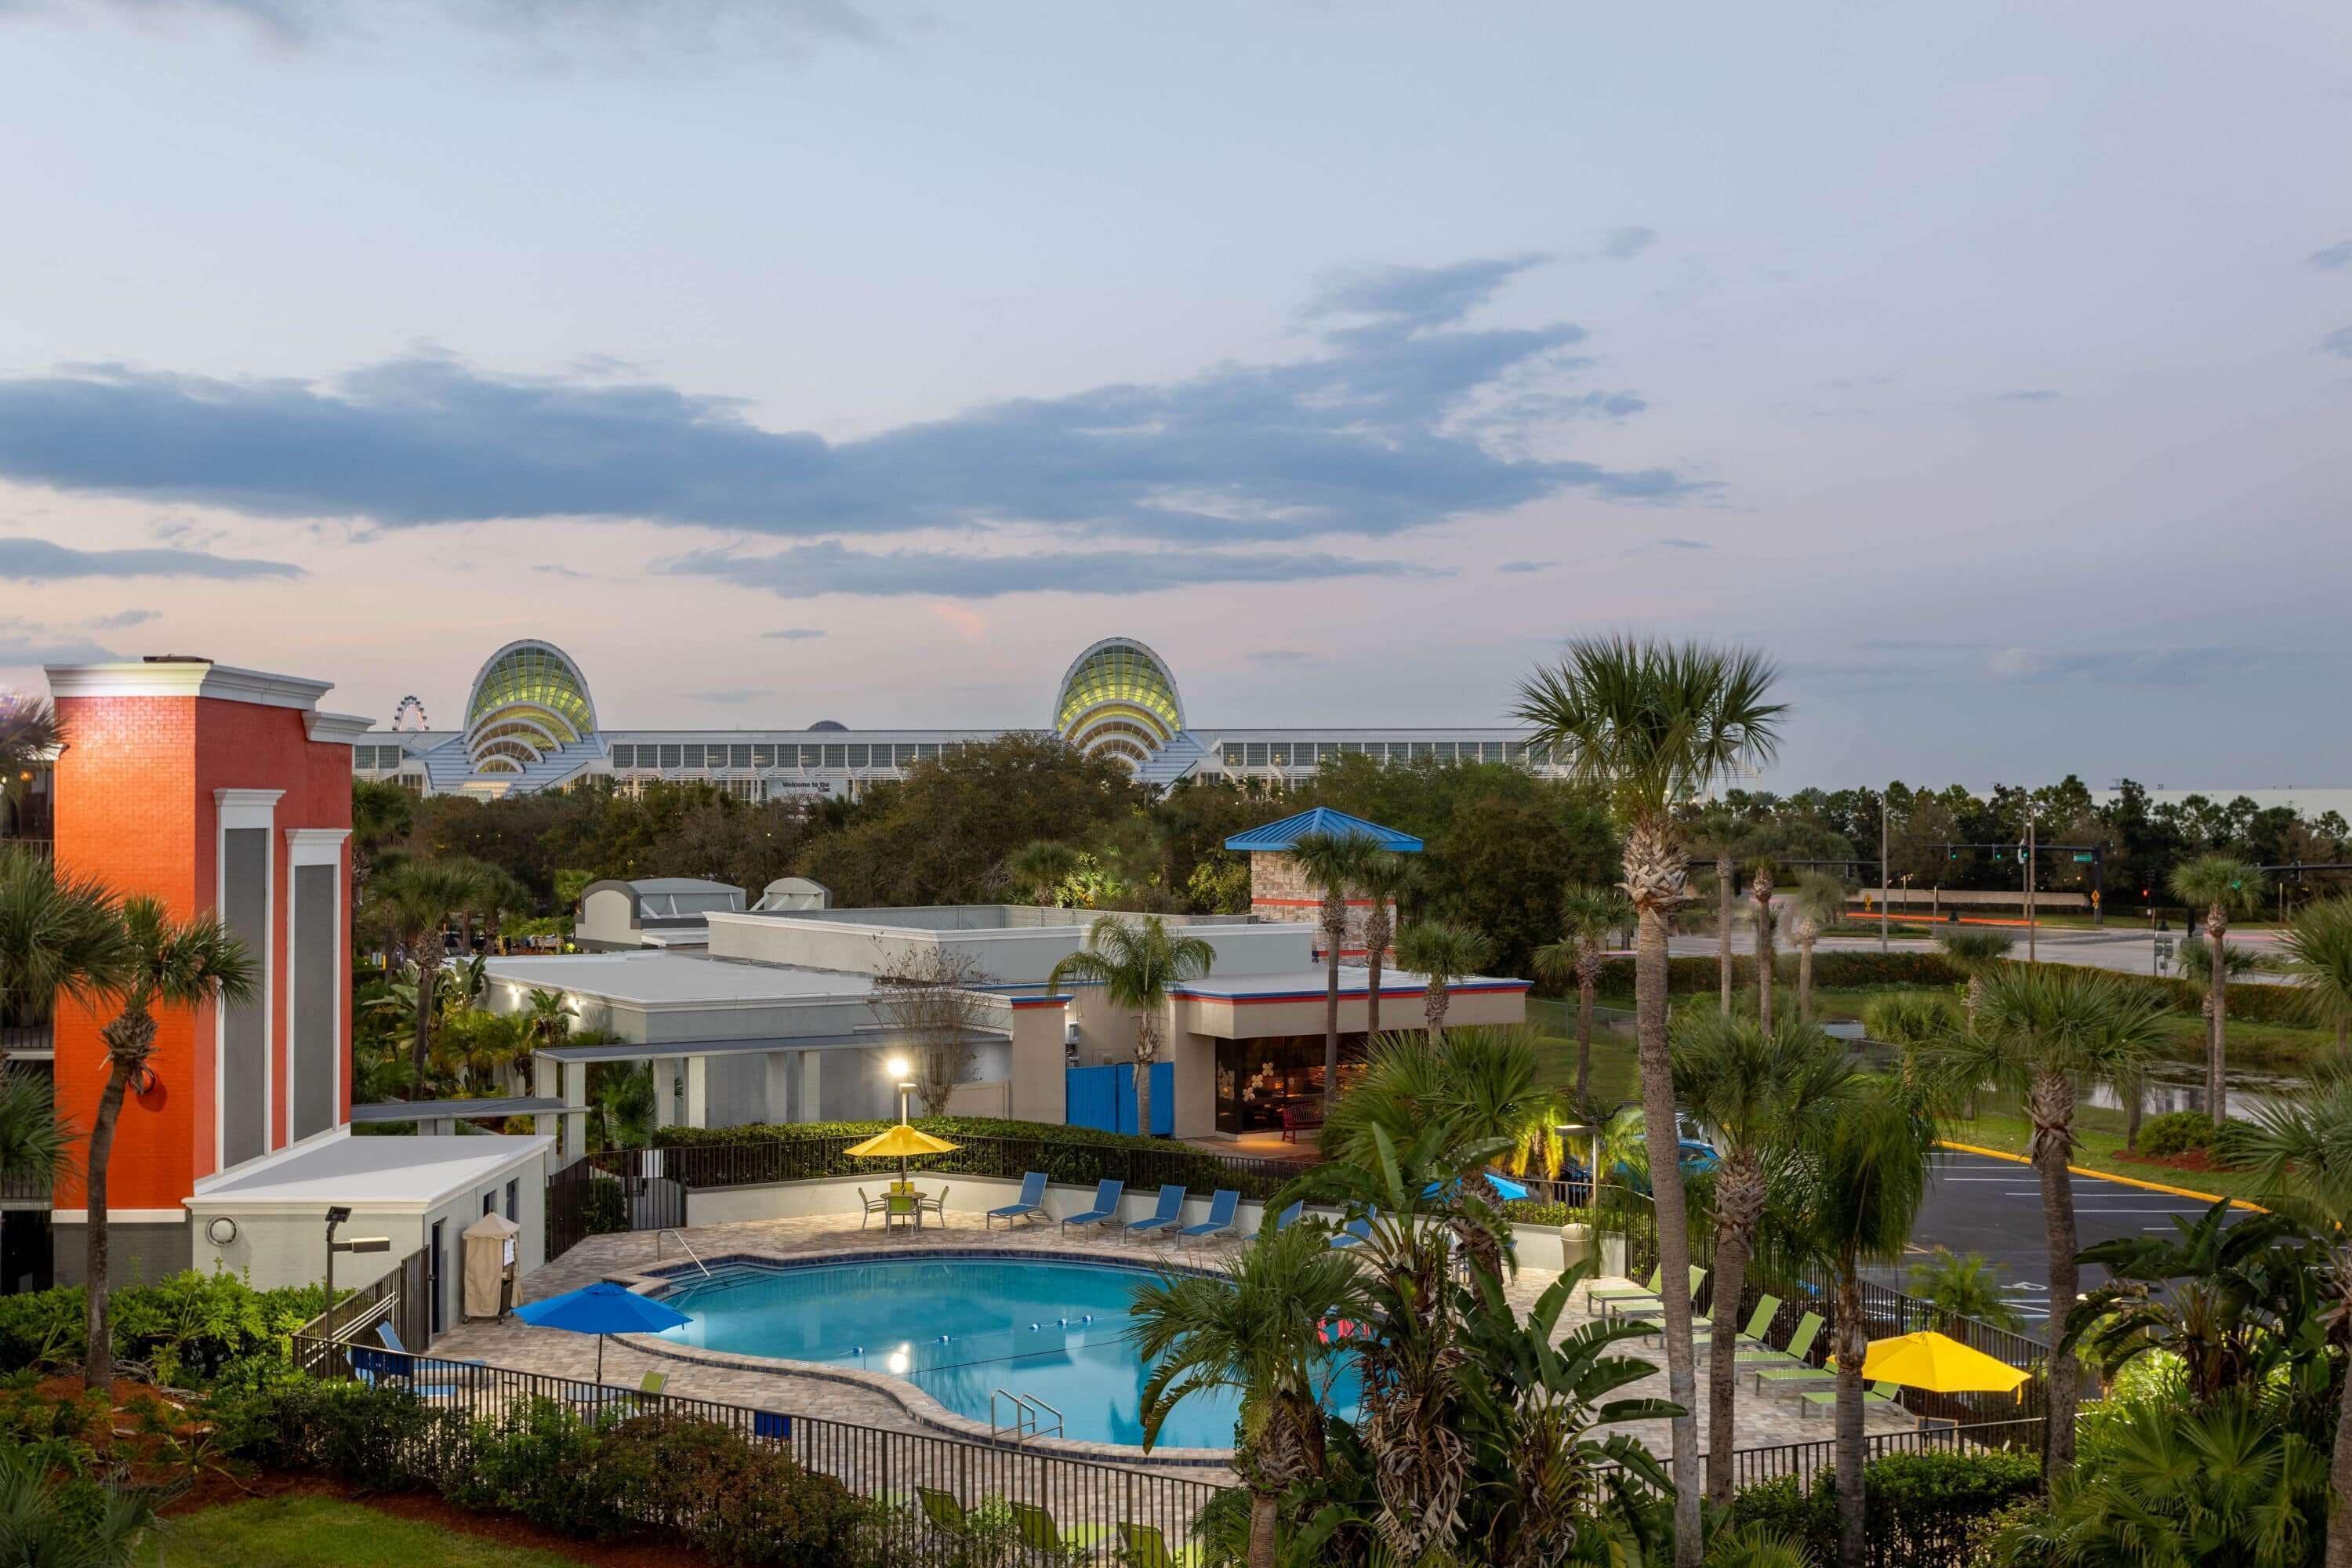 Days Inn by Wyndham Orlando Convention Center/International Drive